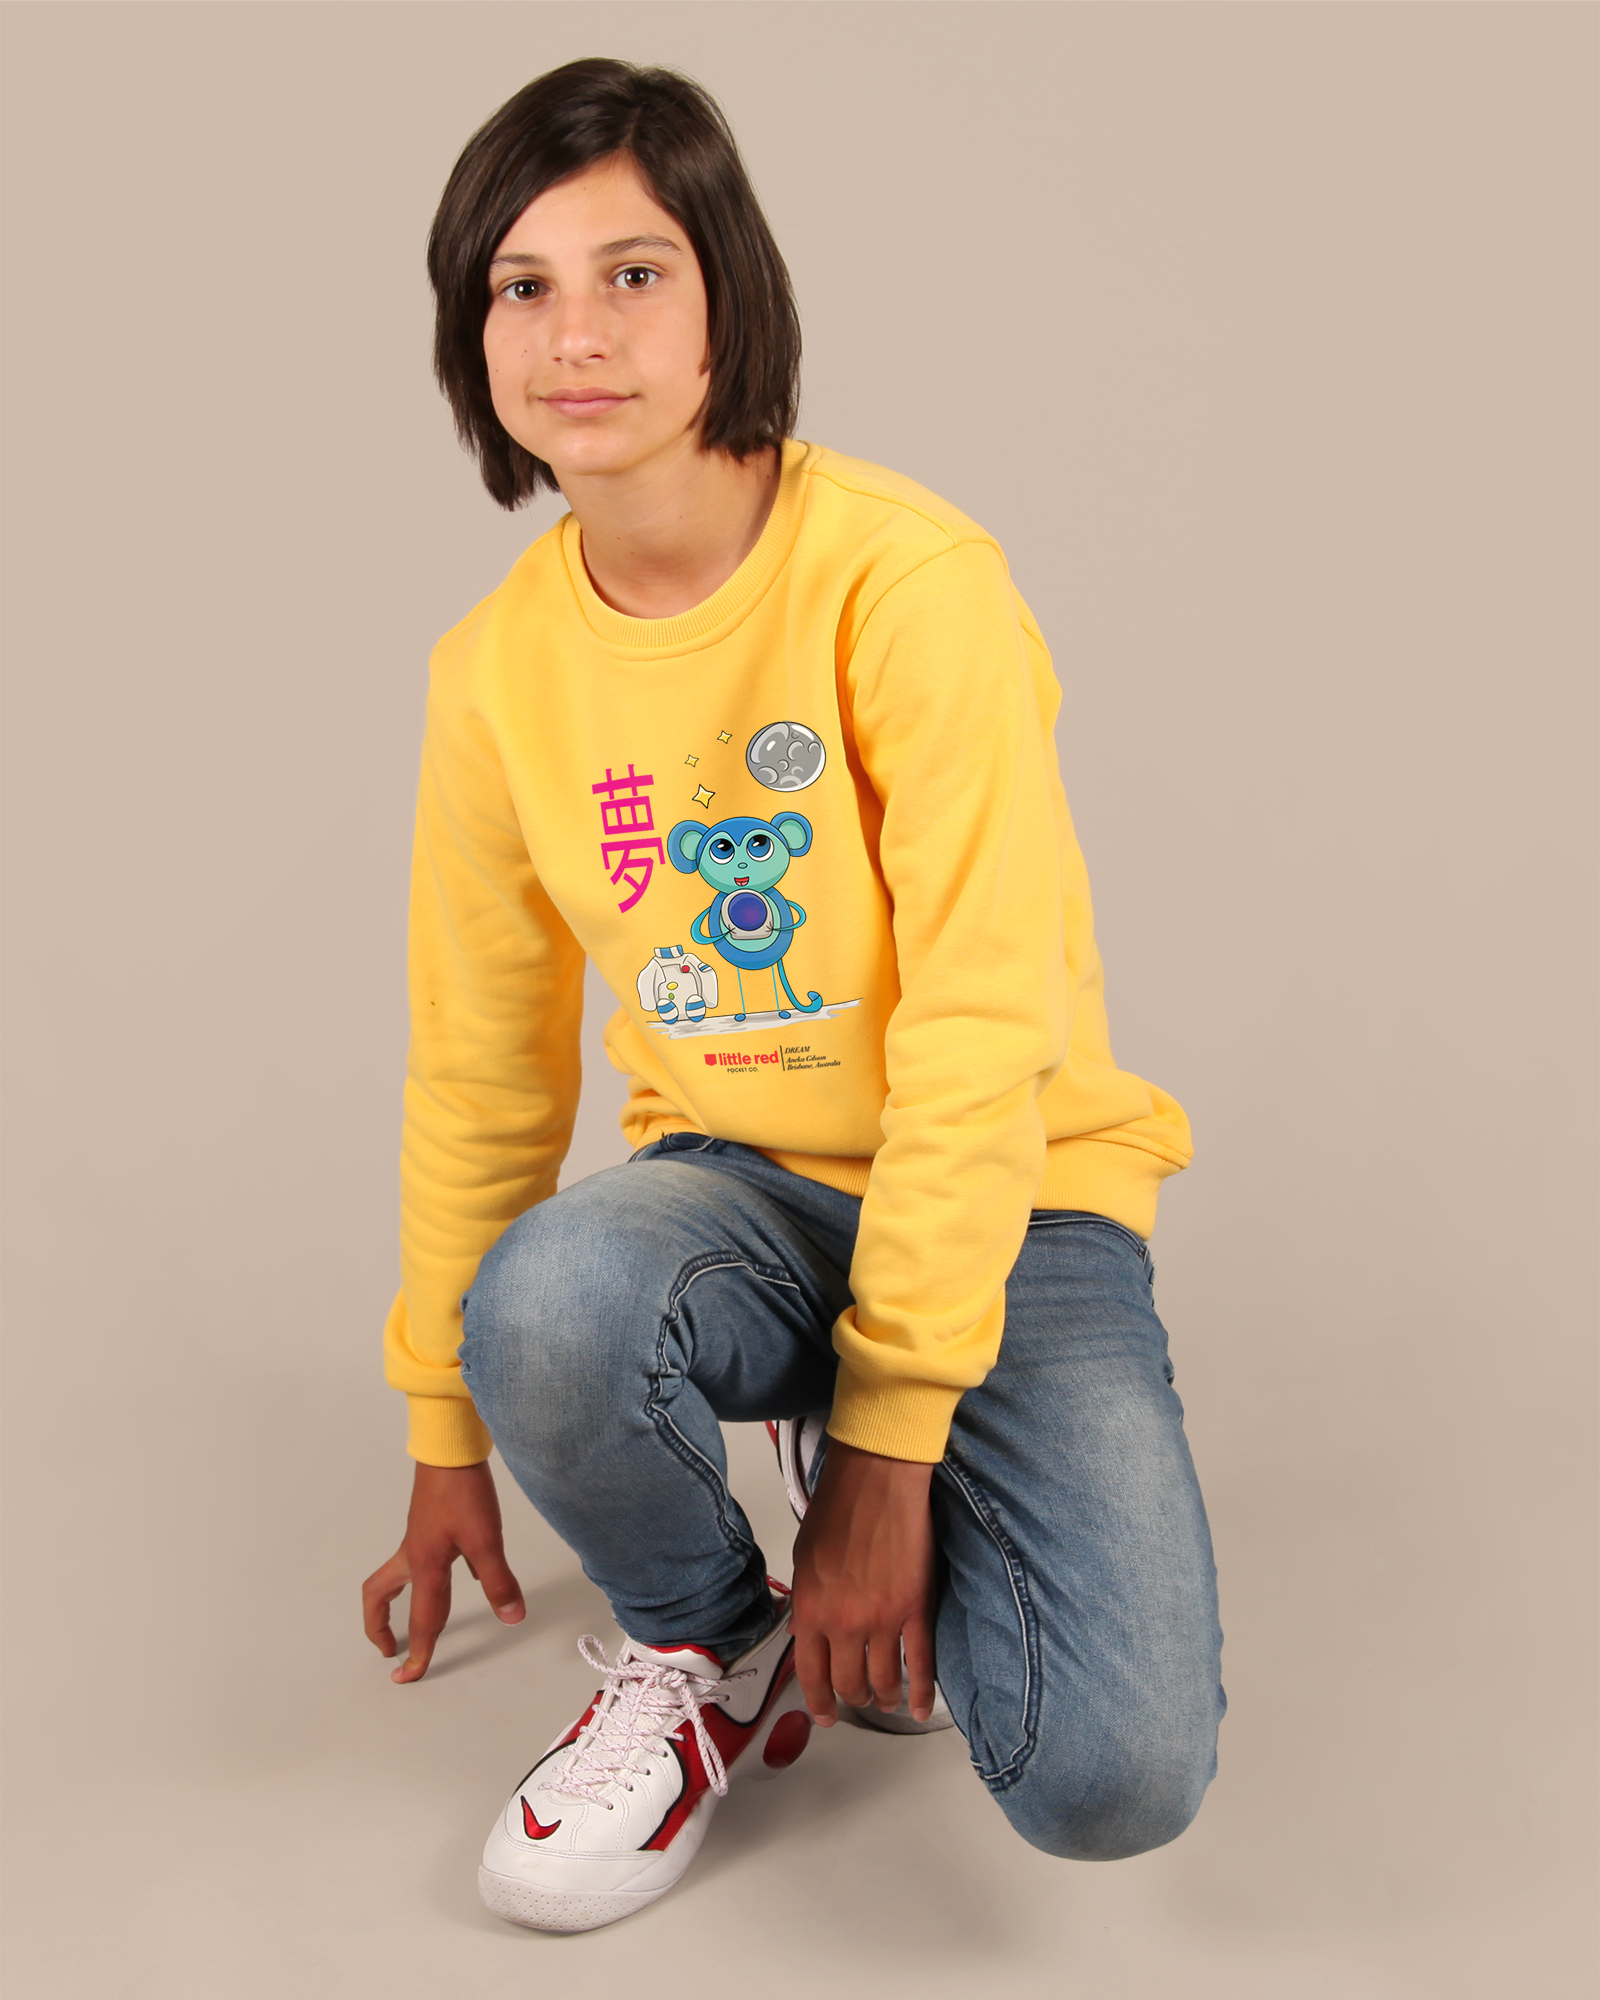 "Dream" Kids Crewneck Sweater - Canary Yellow (Unisex)